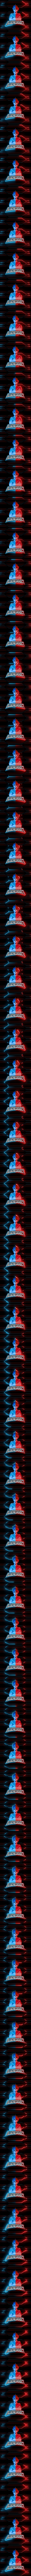 Blueredduet collection image